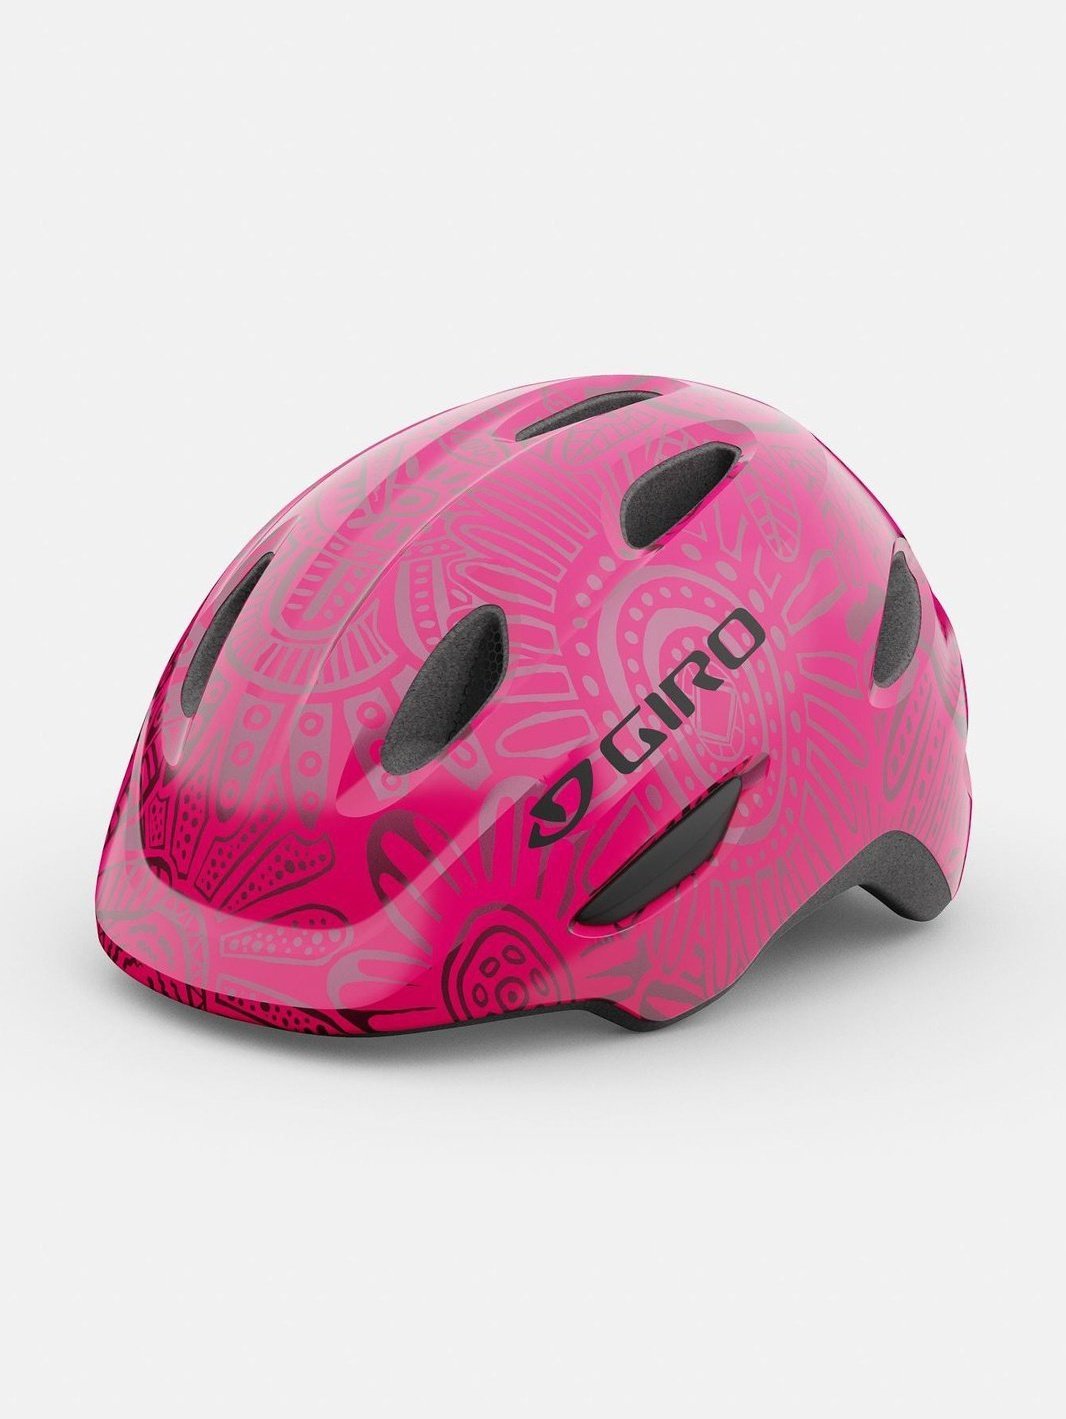 Giros Scamp Youth Helmet